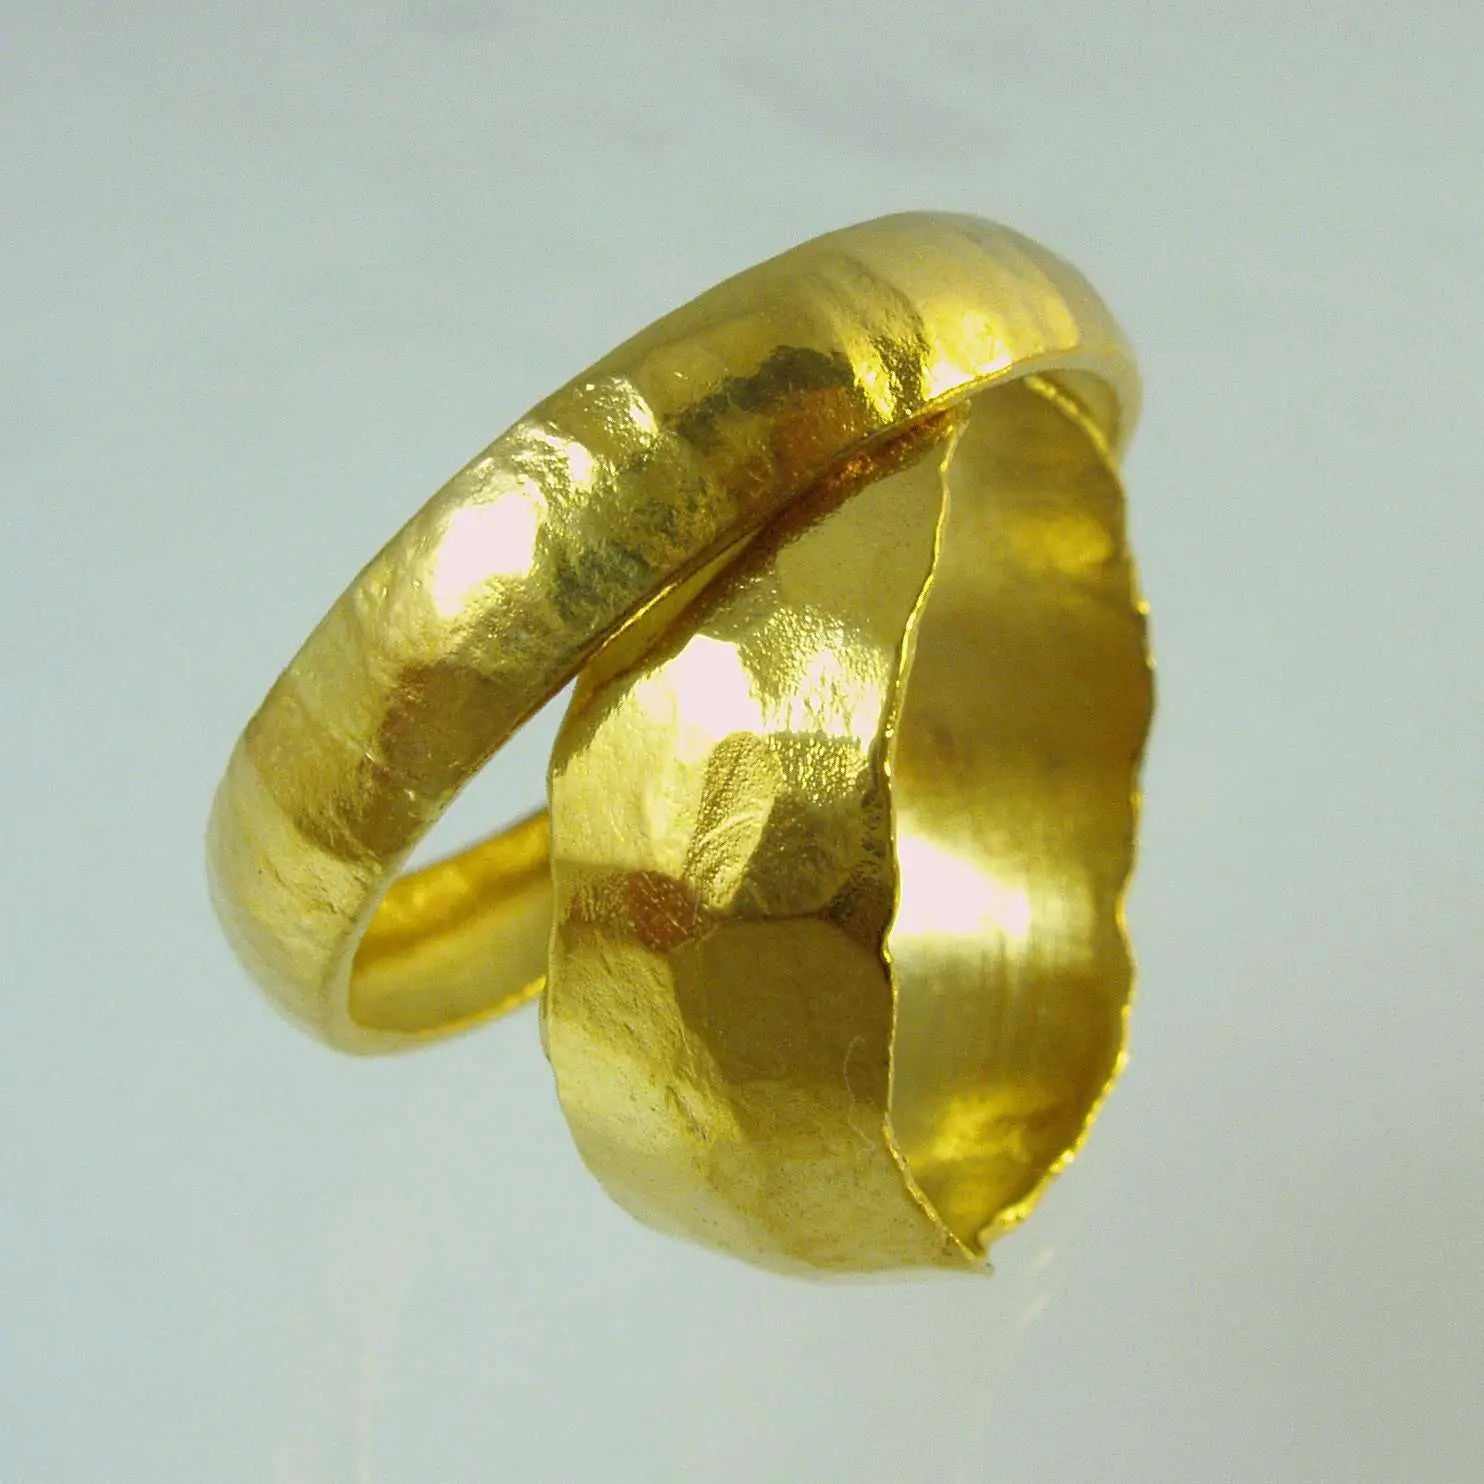 Set of Pure Solid gold wedding bands 24 Karat solid gold